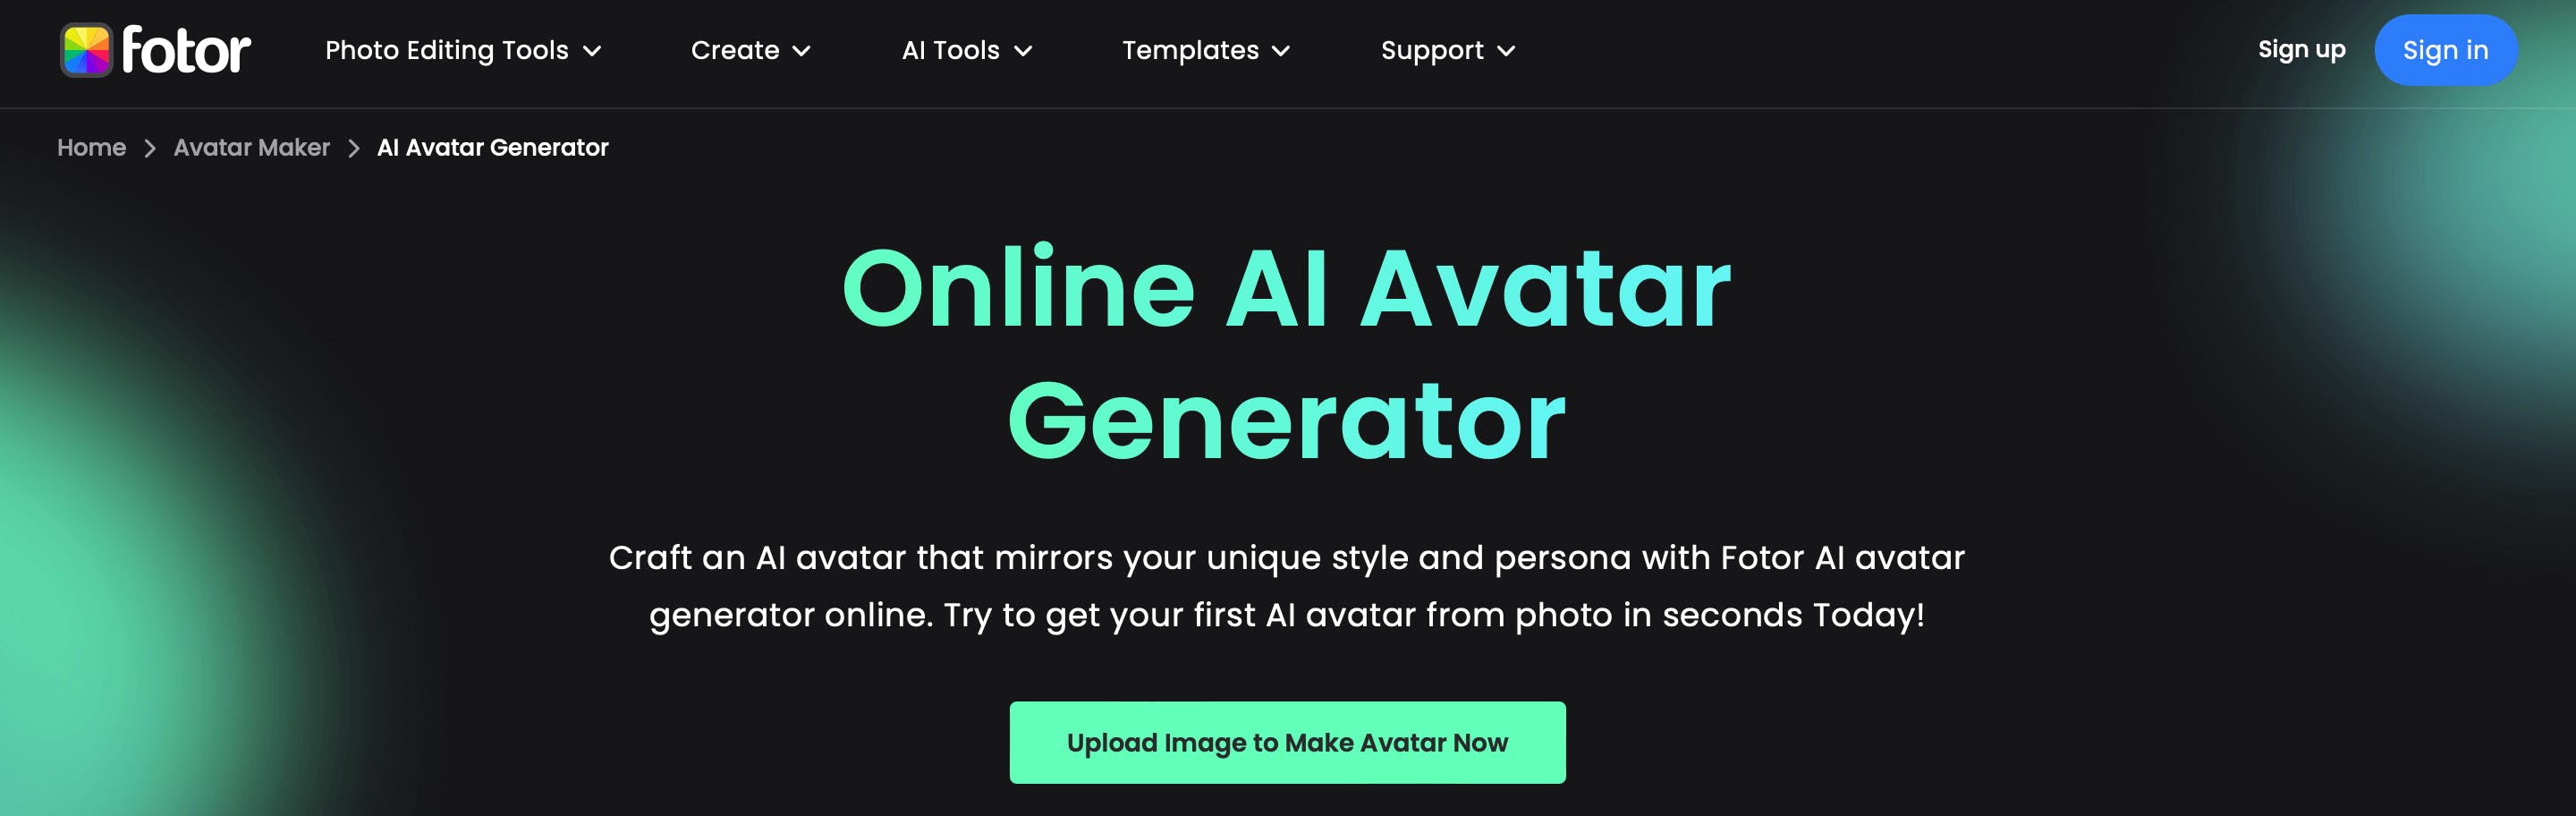 Best Free 15 AI Avatar Generators for Online/Desktop/Mobile